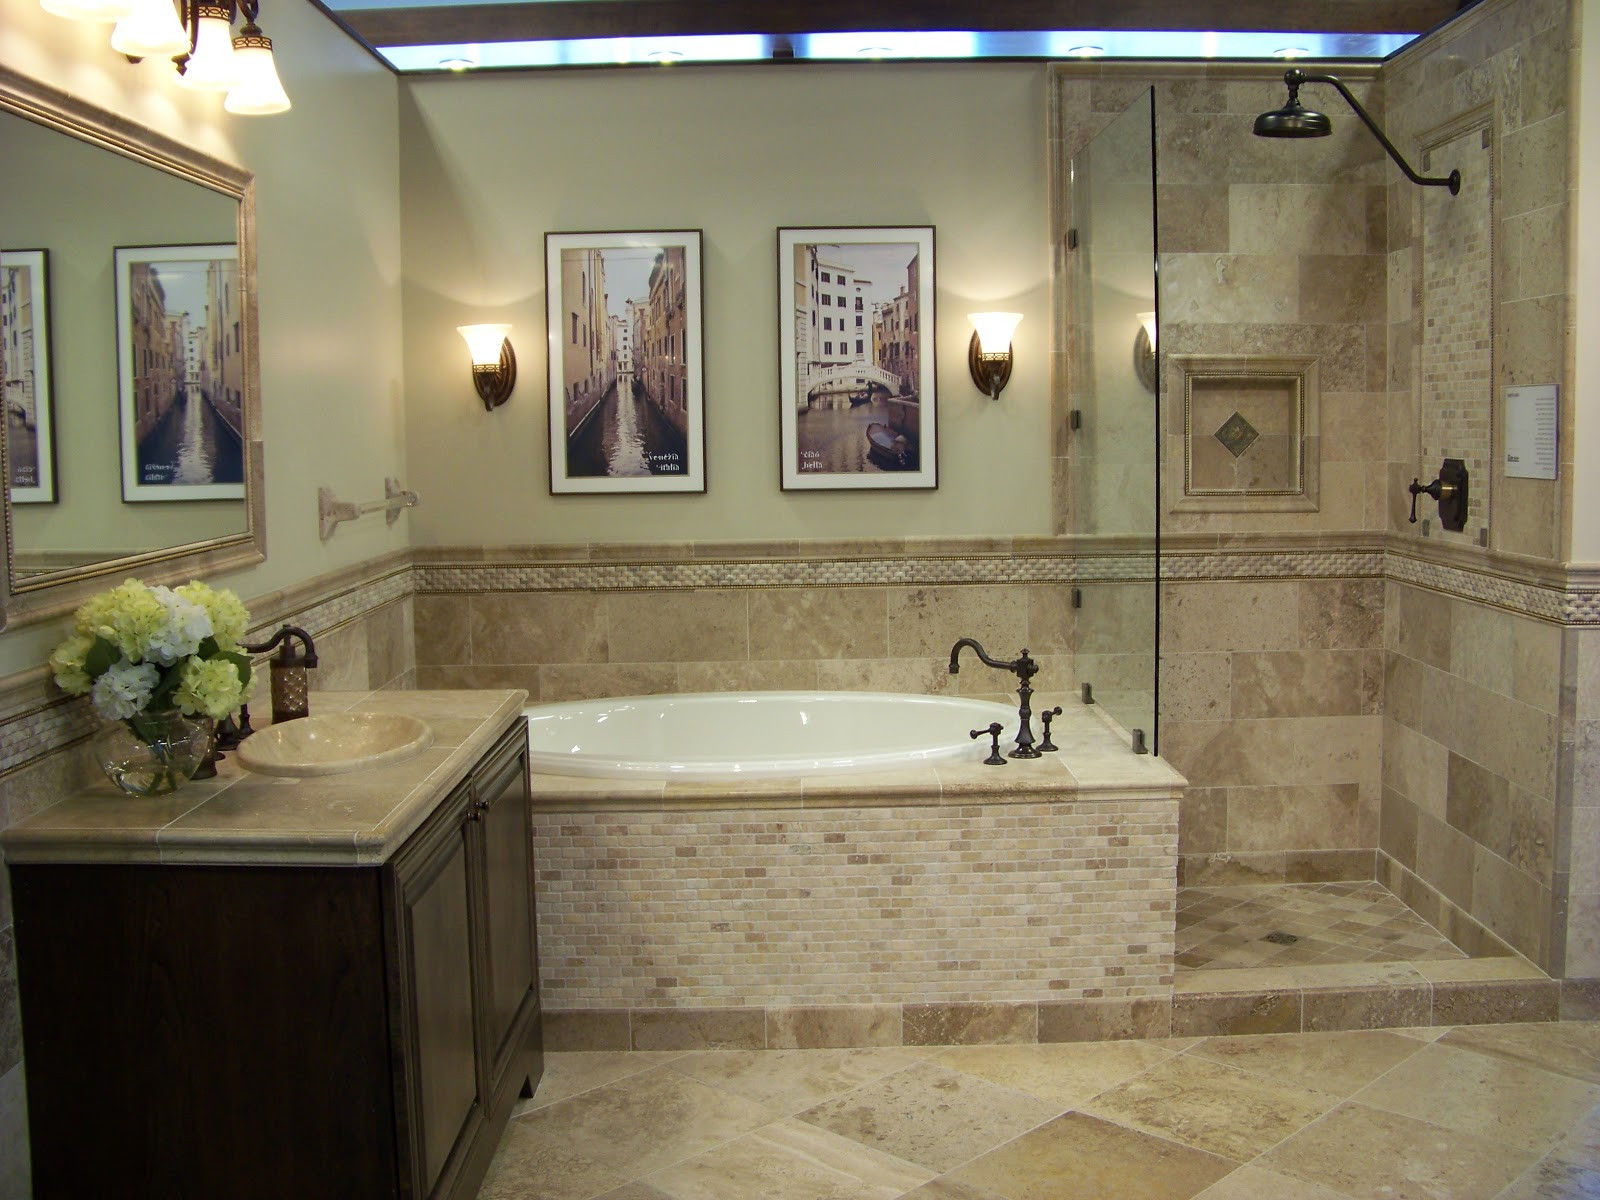 Bathroom Design Stores
 Home Decor Bud ista Bathroom Inspiration The Tile Shop